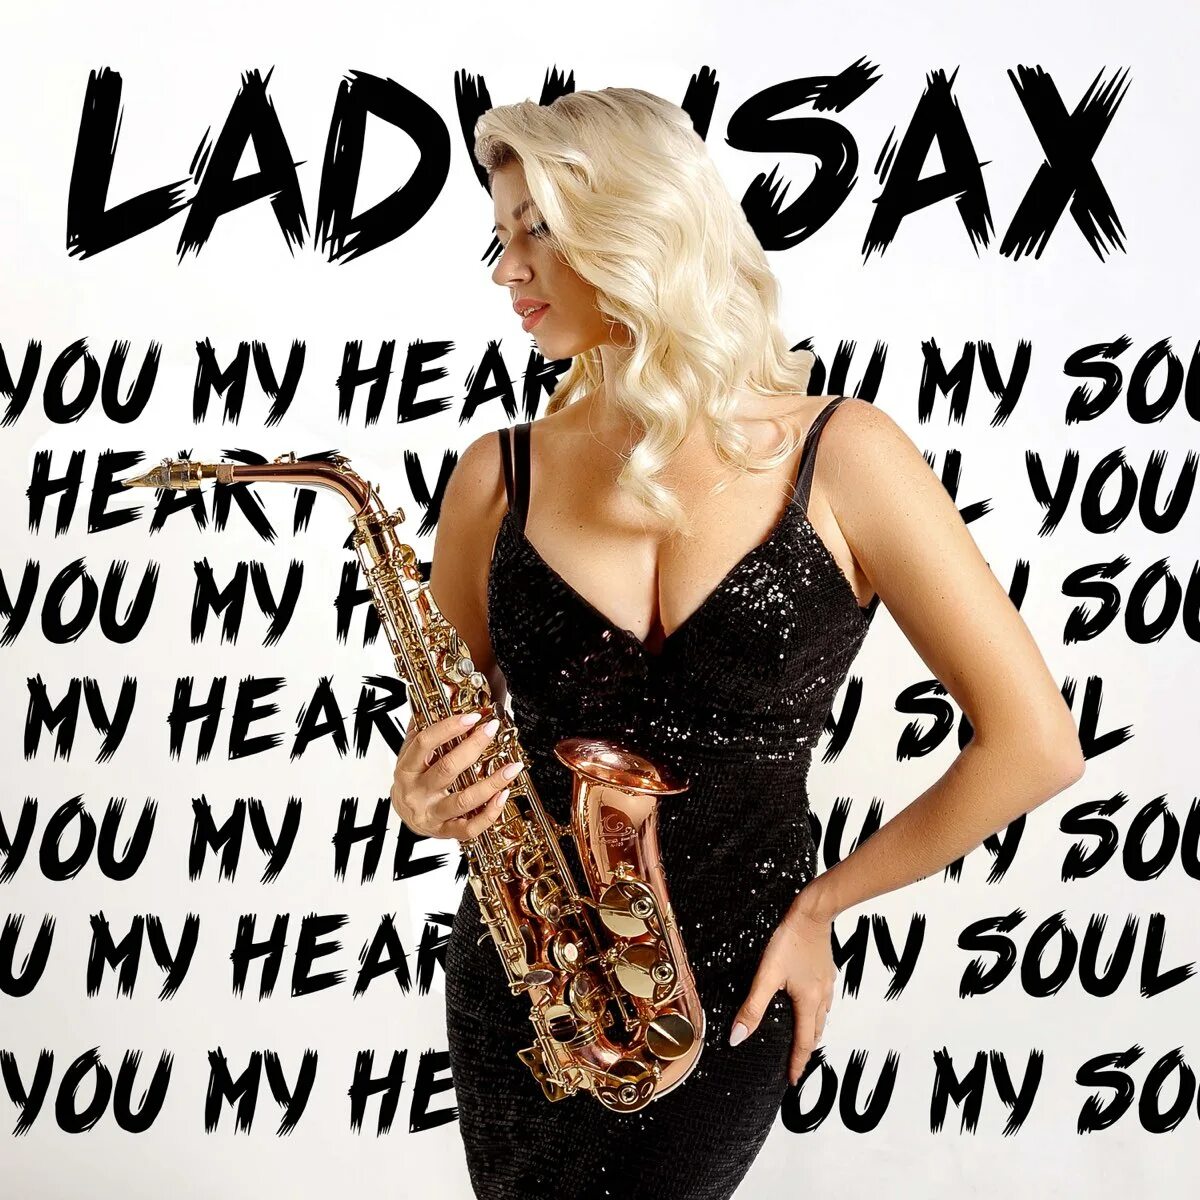 Soul ladynsax. You my Heart, you my Soul ladynsax. Ladynsax обложка альбома. Ladynsax блоггер.